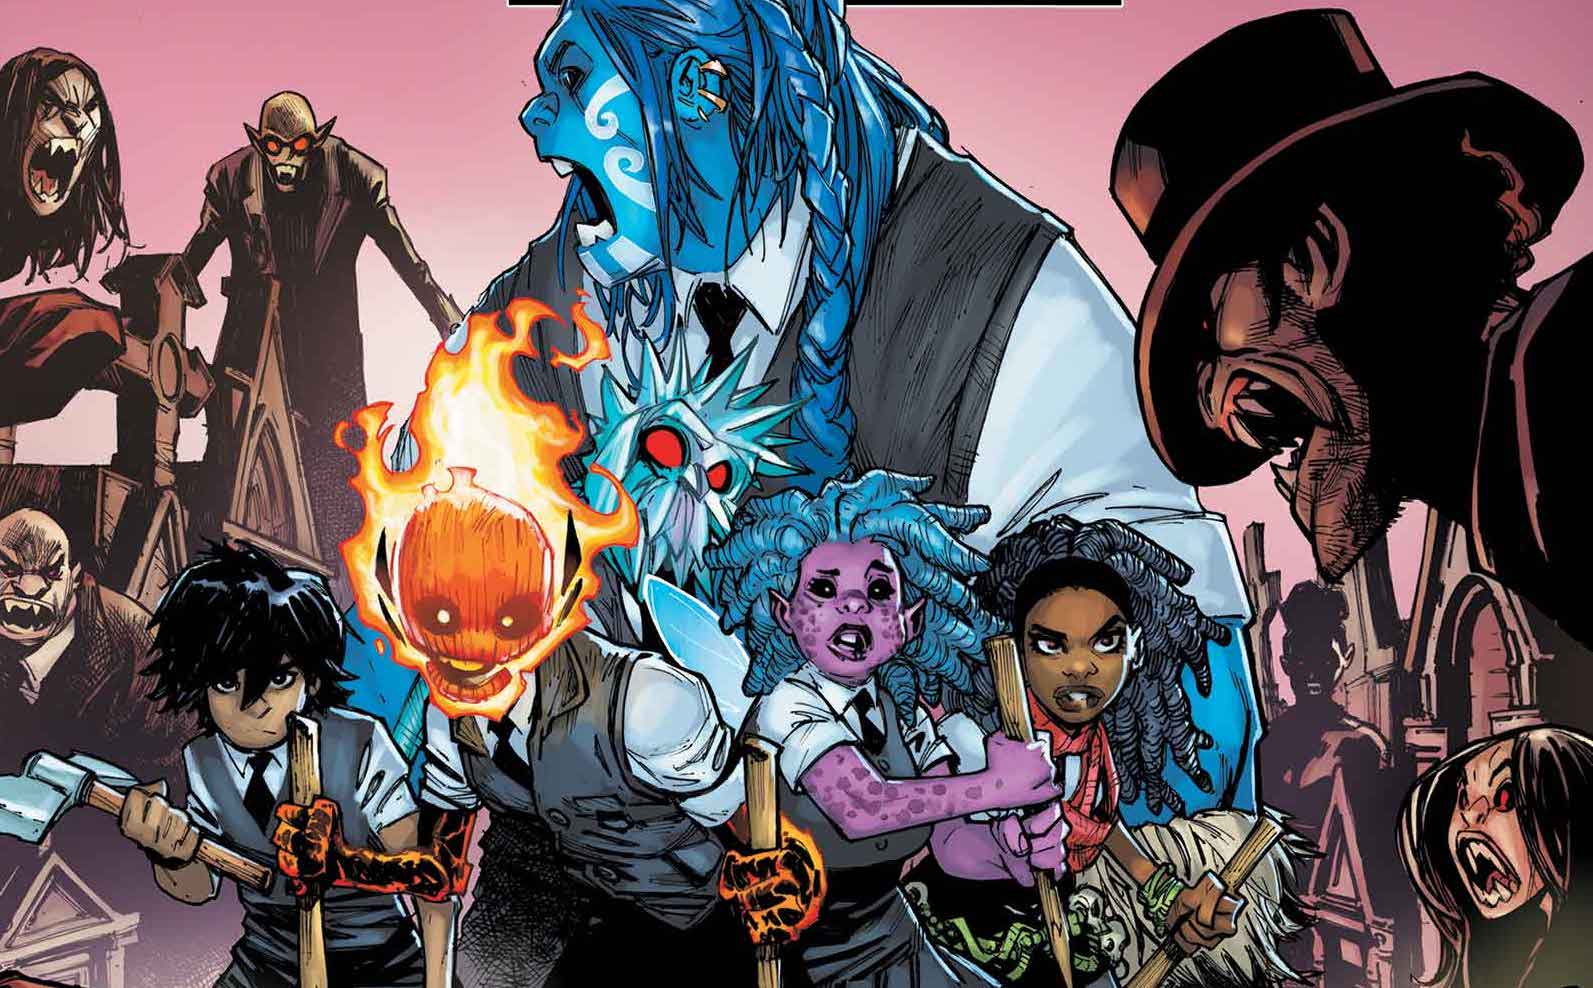 'Strange Academy: Blood Hunt' revealed for 3 issue miniseries